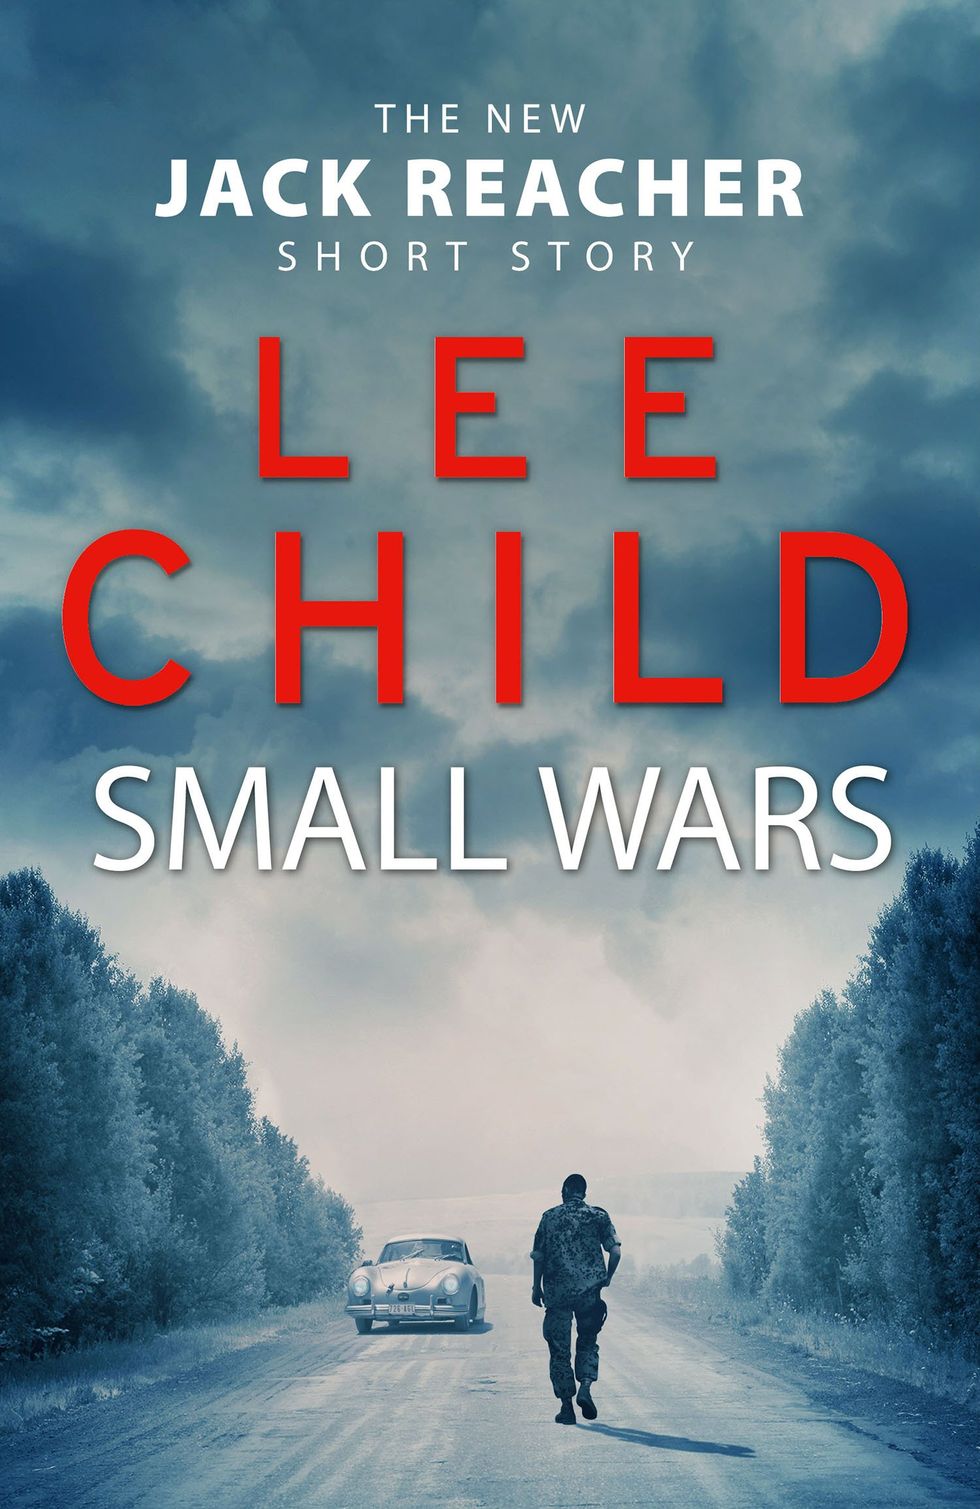 Small Wars (short story, 2015)